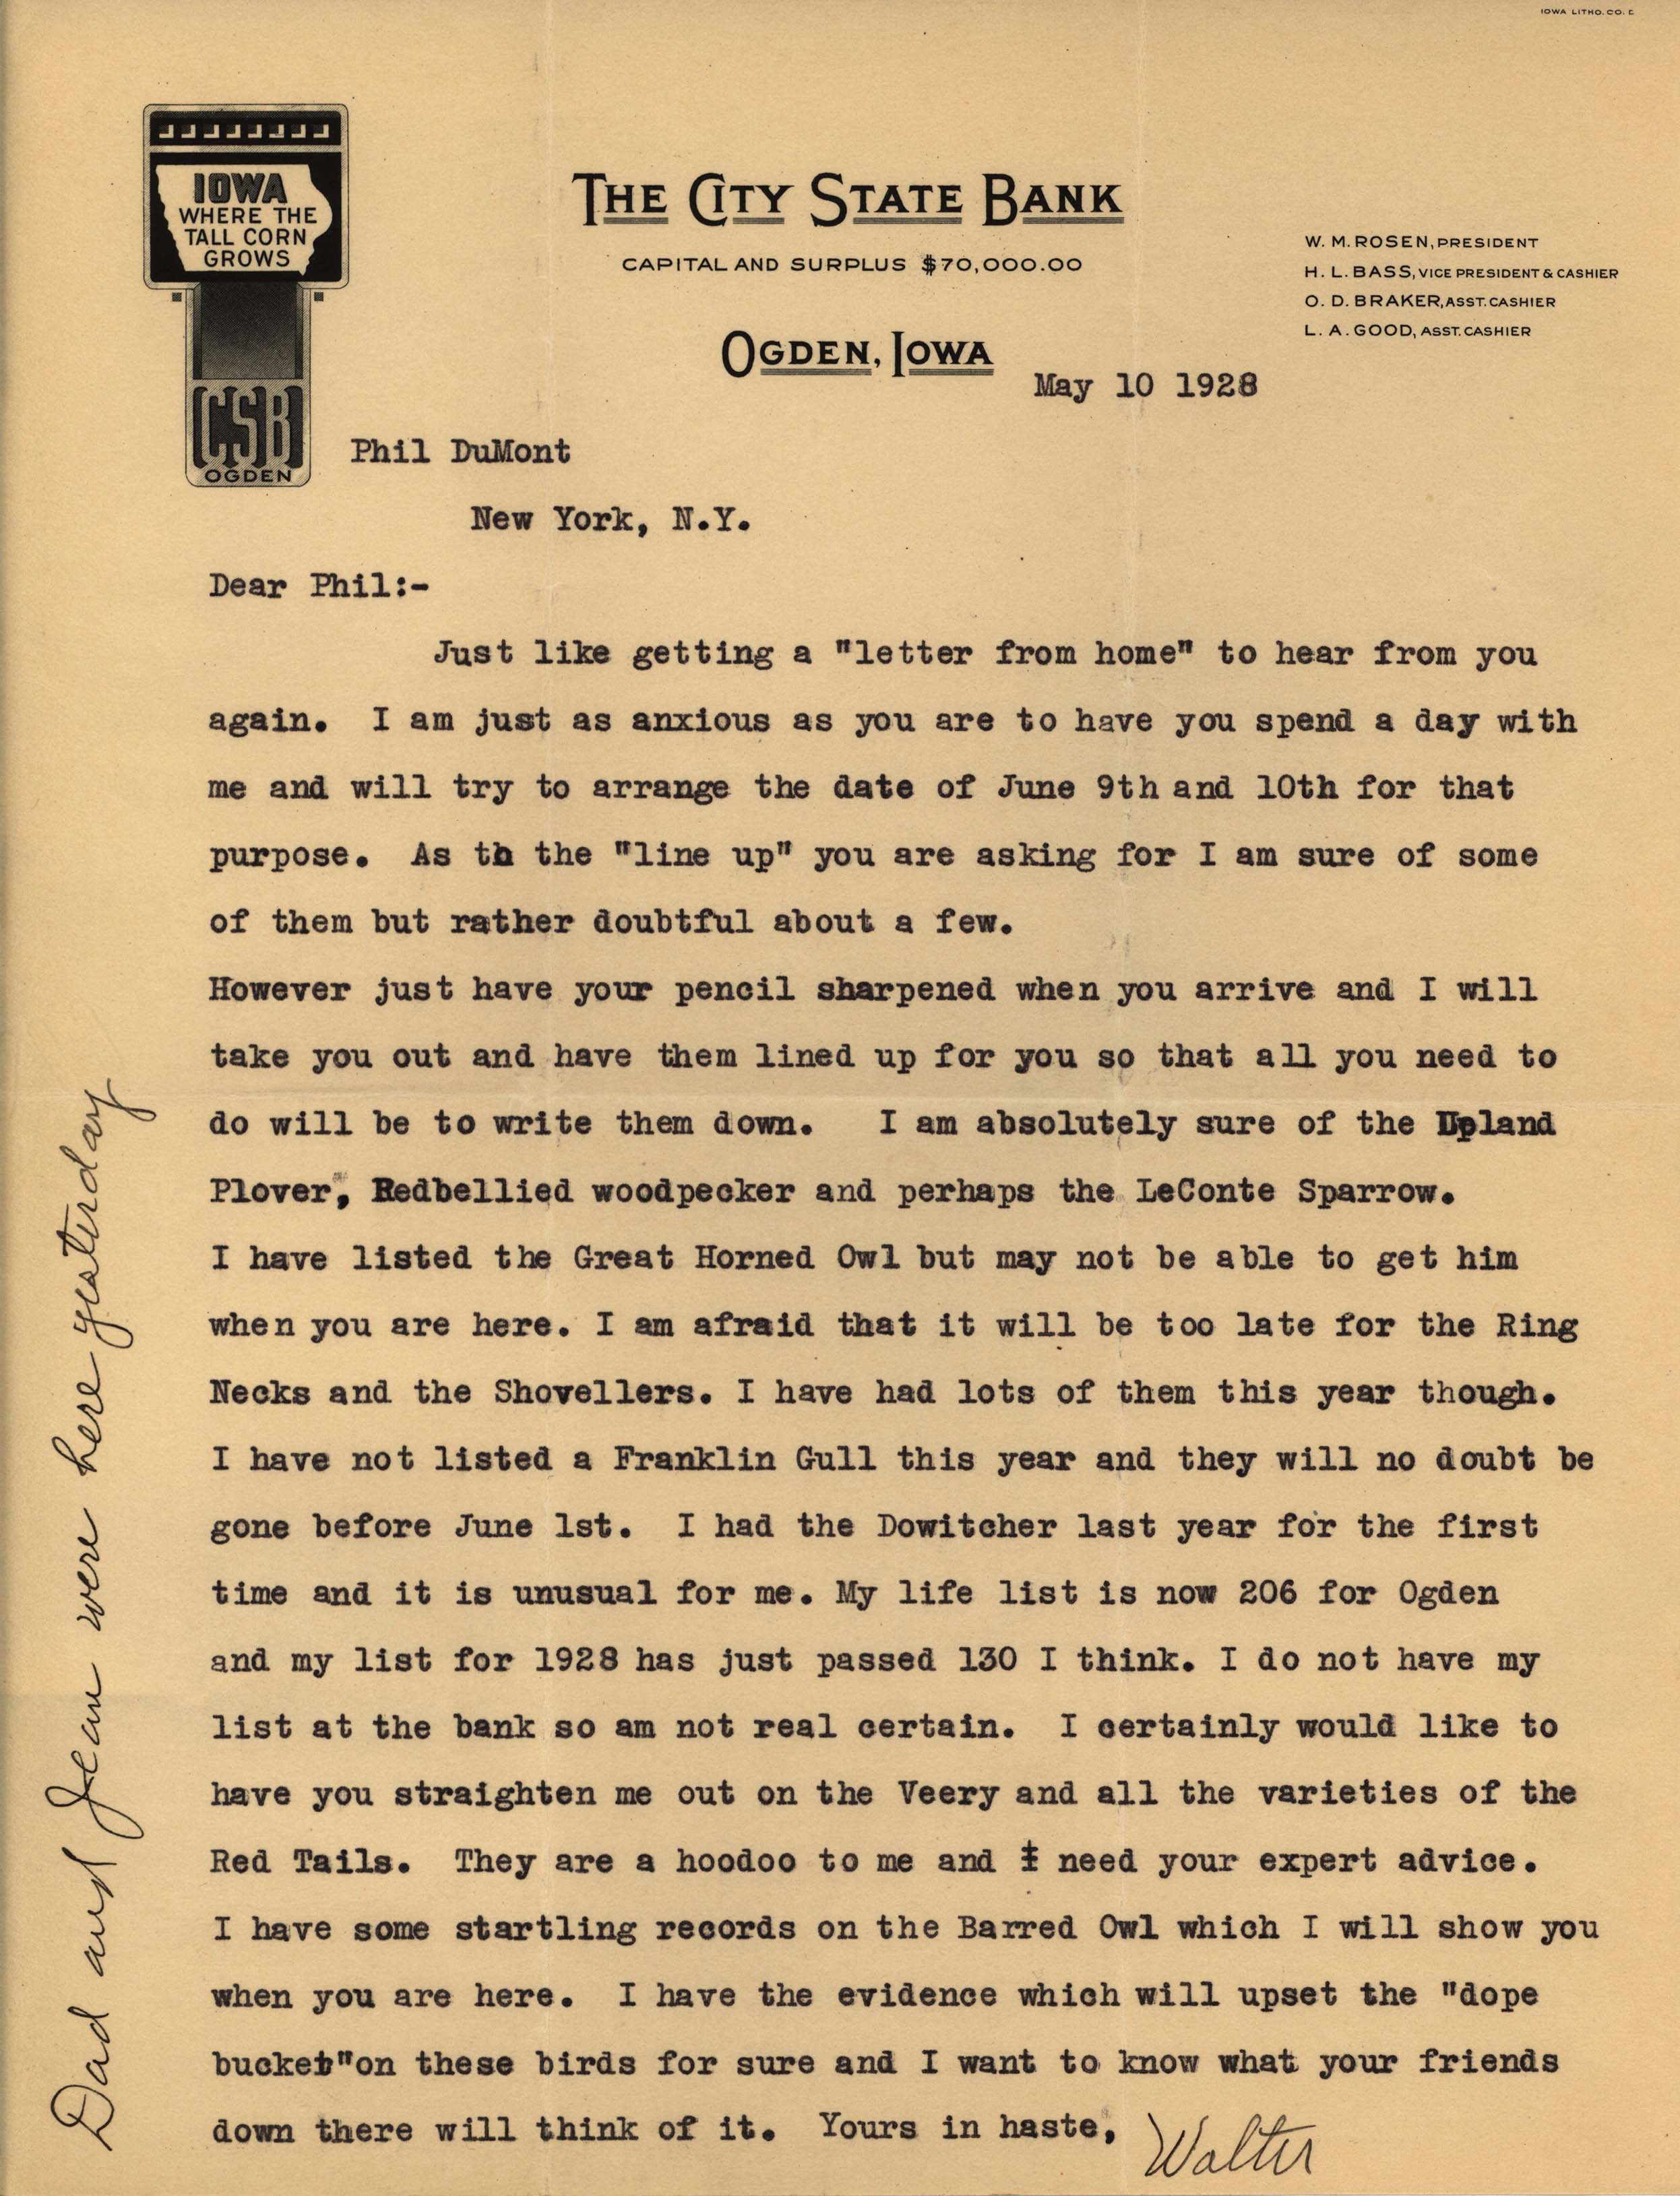 Walter Rosene letter to Philip DuMont regarding likely birds to sight in June, May 10, 1928